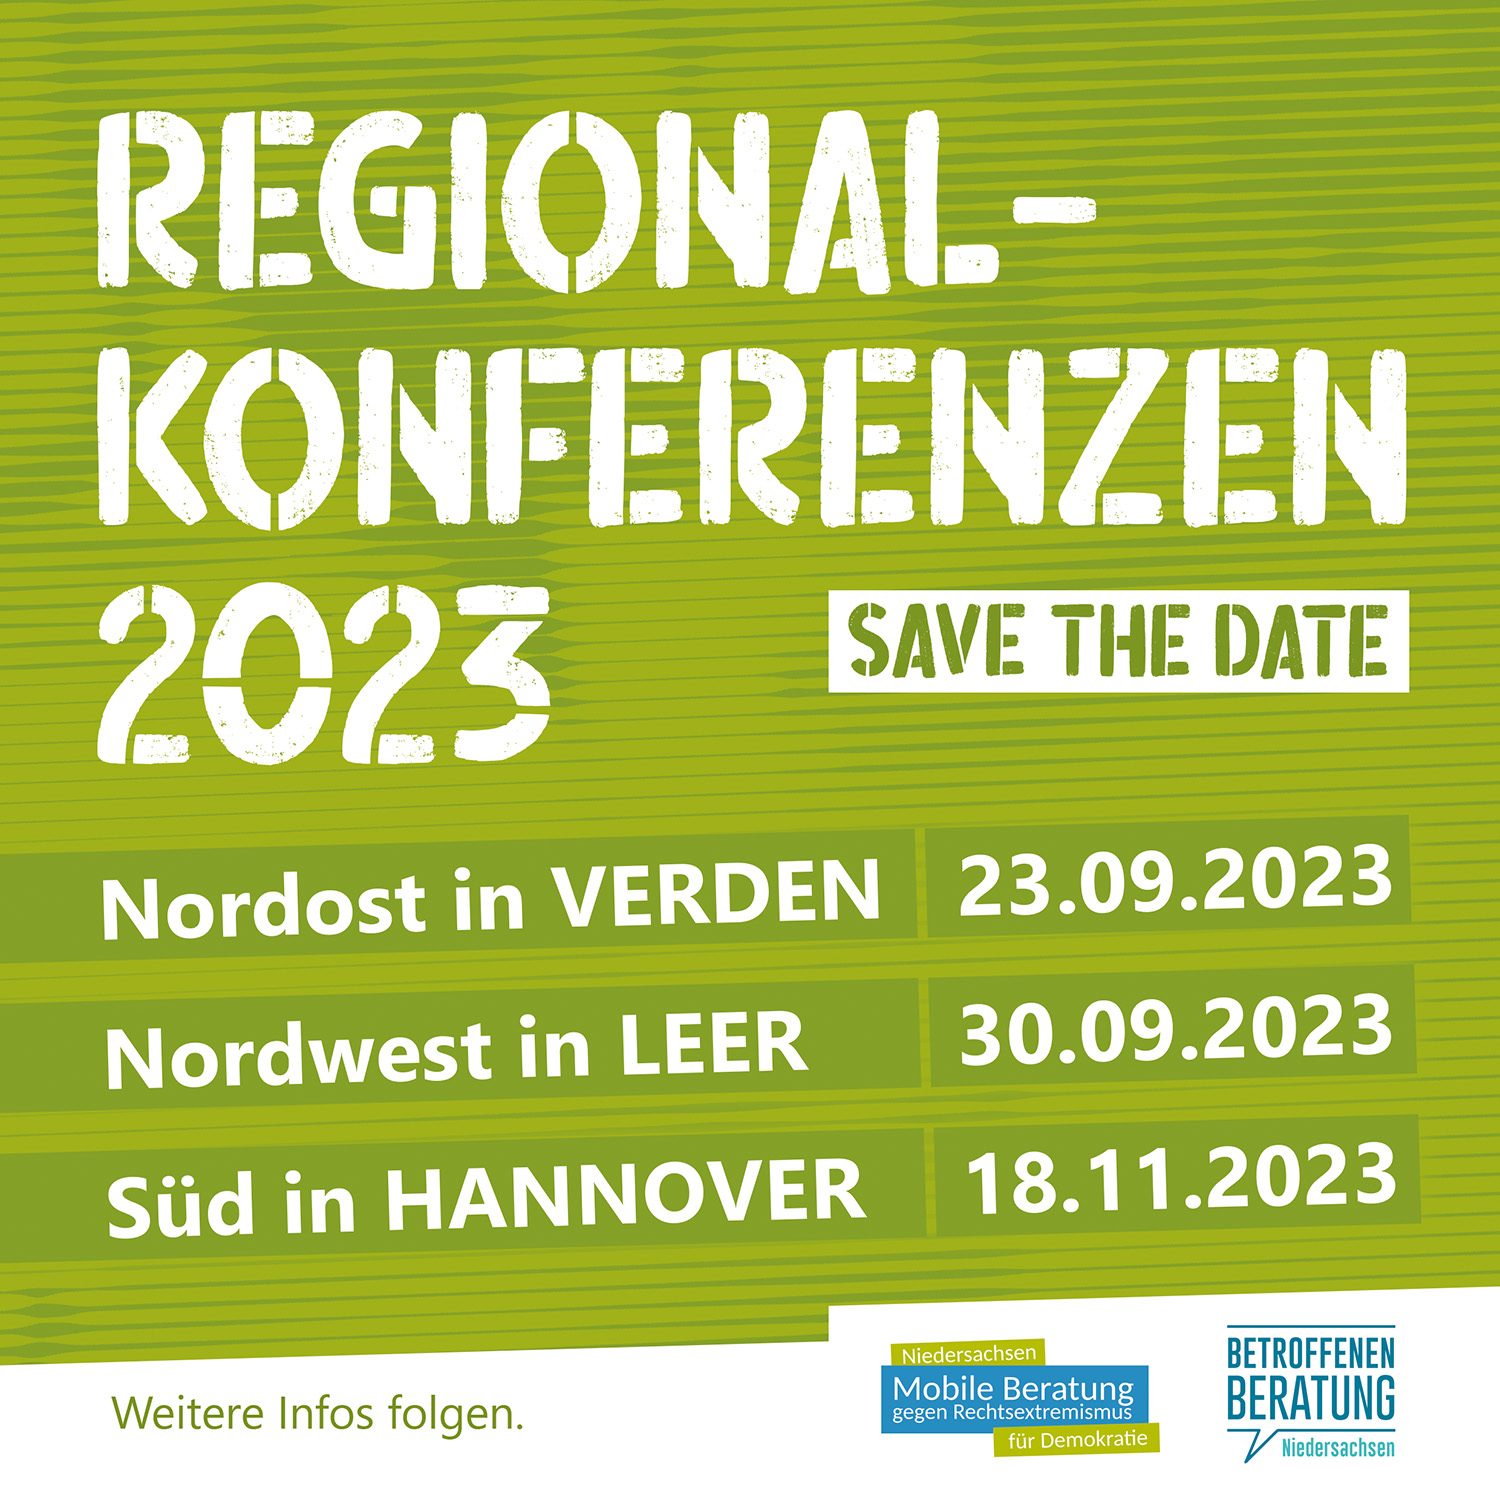 Regionalkonferenzen 2023: - Nordost in Verden 23.09. - Nordwest in Leer 30.09. - Süd in Hannover 18.11.